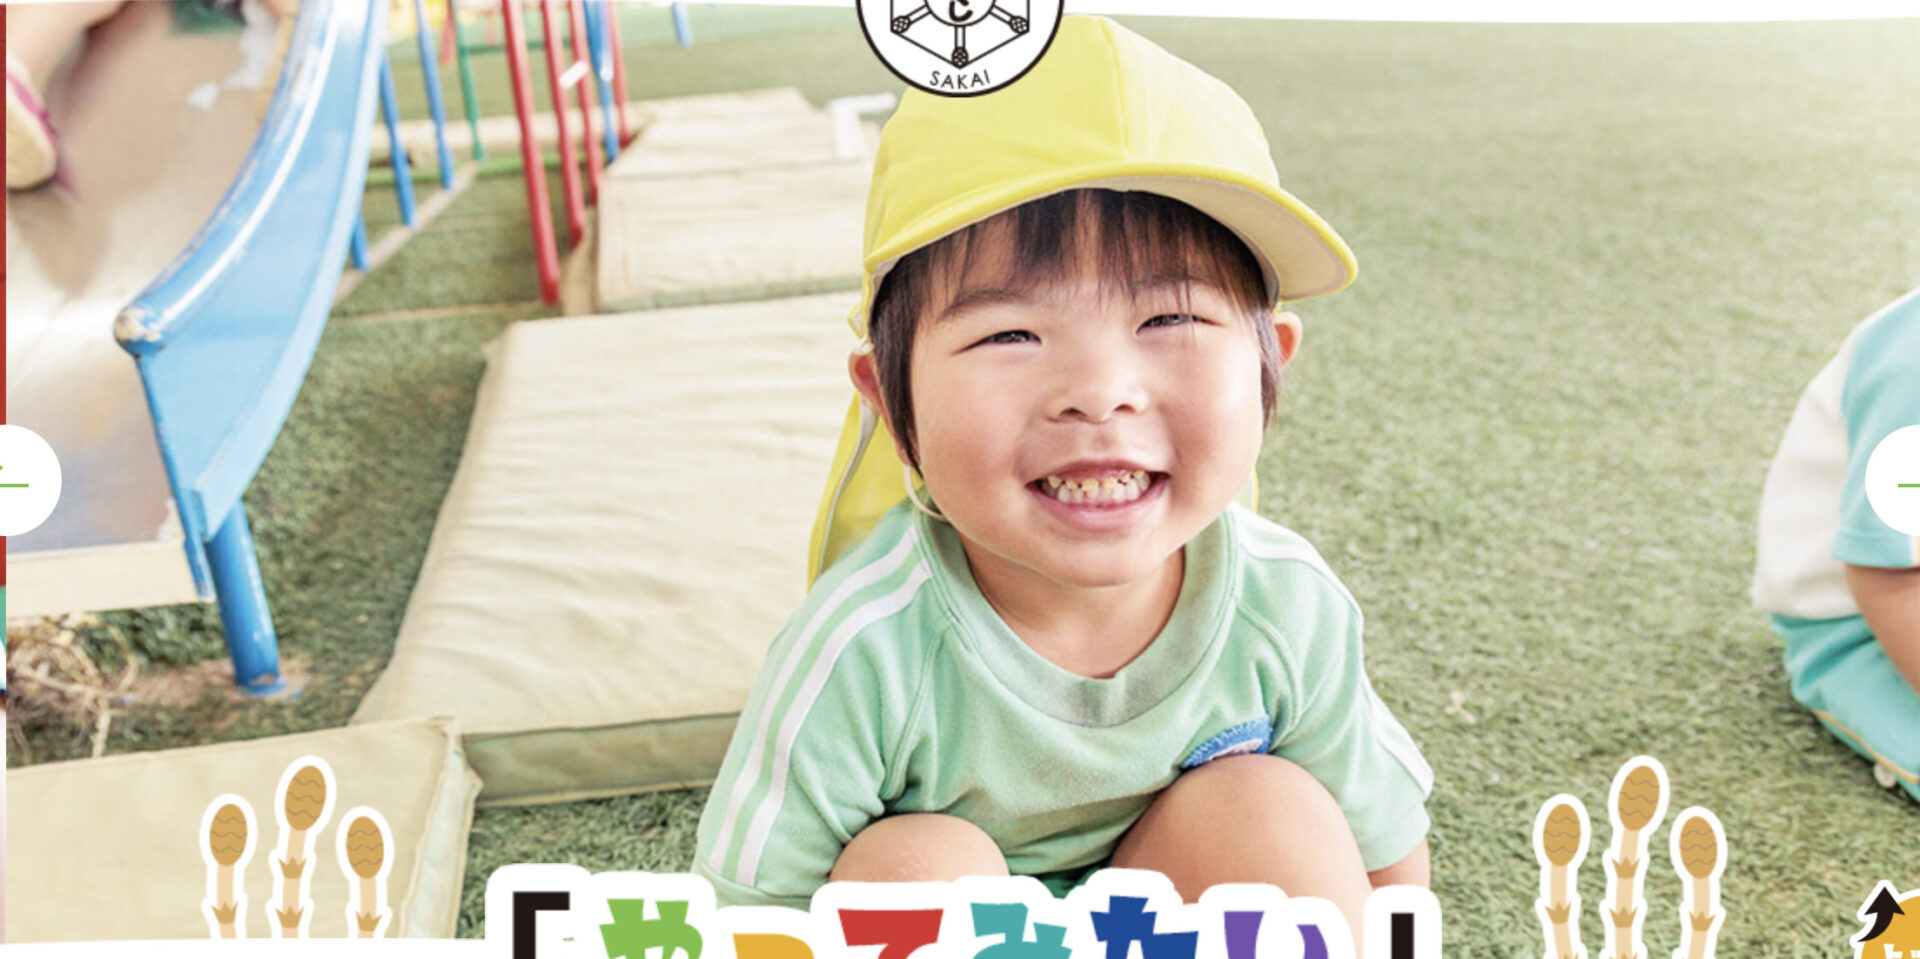 sakai-tsukushi-kodomoen-kindergarten